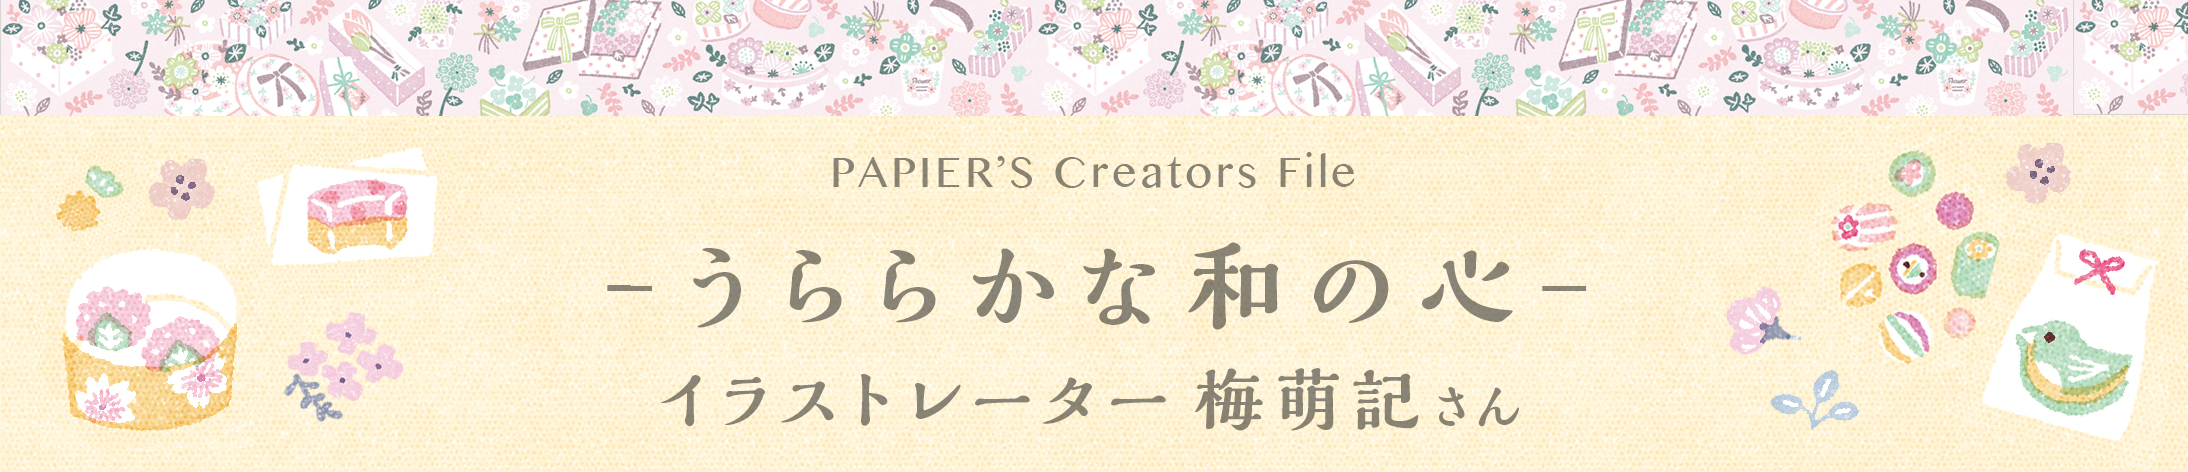 【PAPIER’s Creators File vol.3】イラストレーター / 梅萌記さん